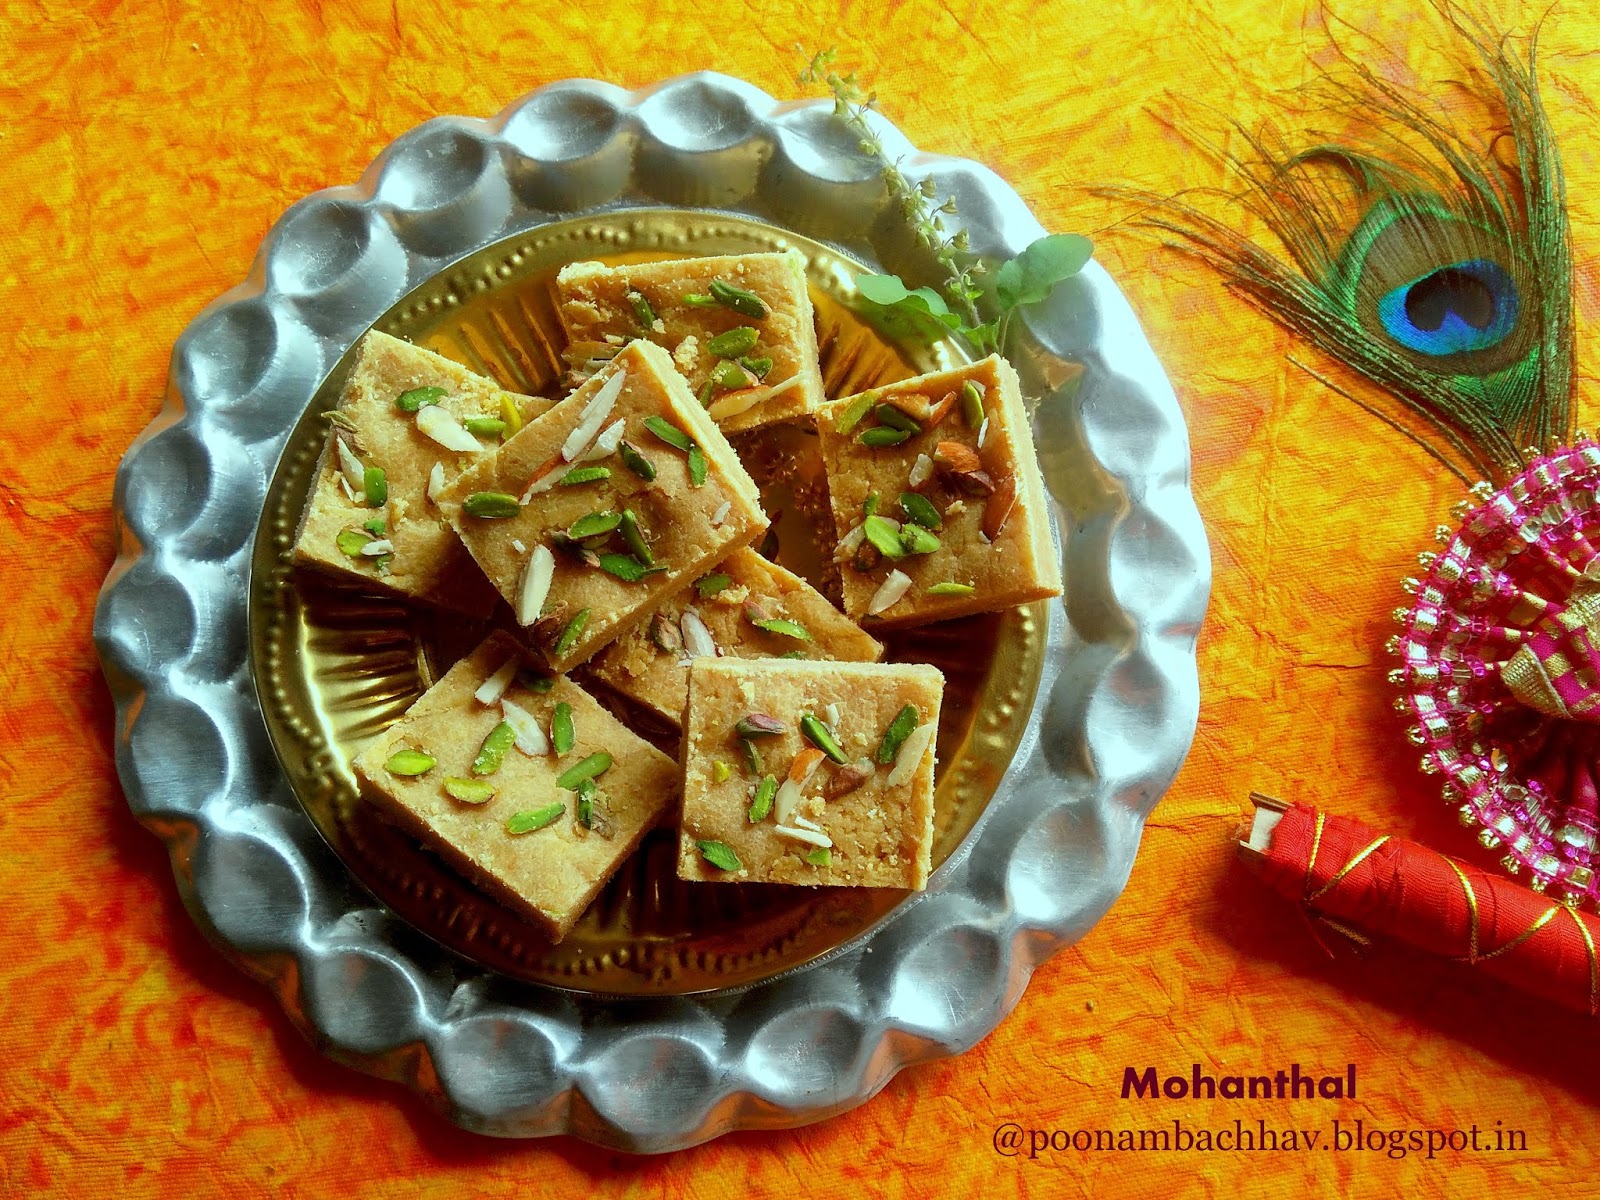 rajasthani dishes, rajasthani cuisine, Indian cuisine, Indian dishes, rajasthani sweet, mohanthal, besan ki barfi